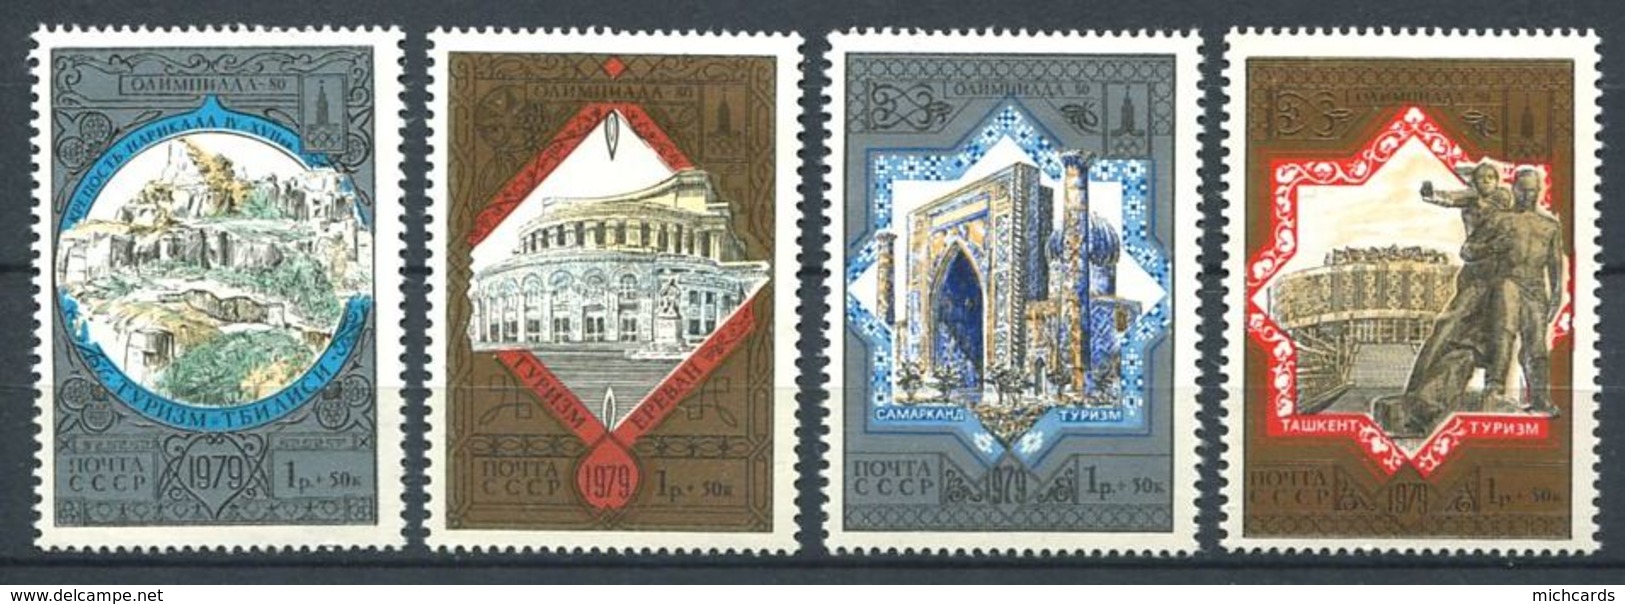 187 RUSSIE (URSS) 1979 - Yvert 4617/20 - Tourisme Armoirie Embleme JO - Neuf ** (MNH) Sans Trace De Charniere - Ungebraucht